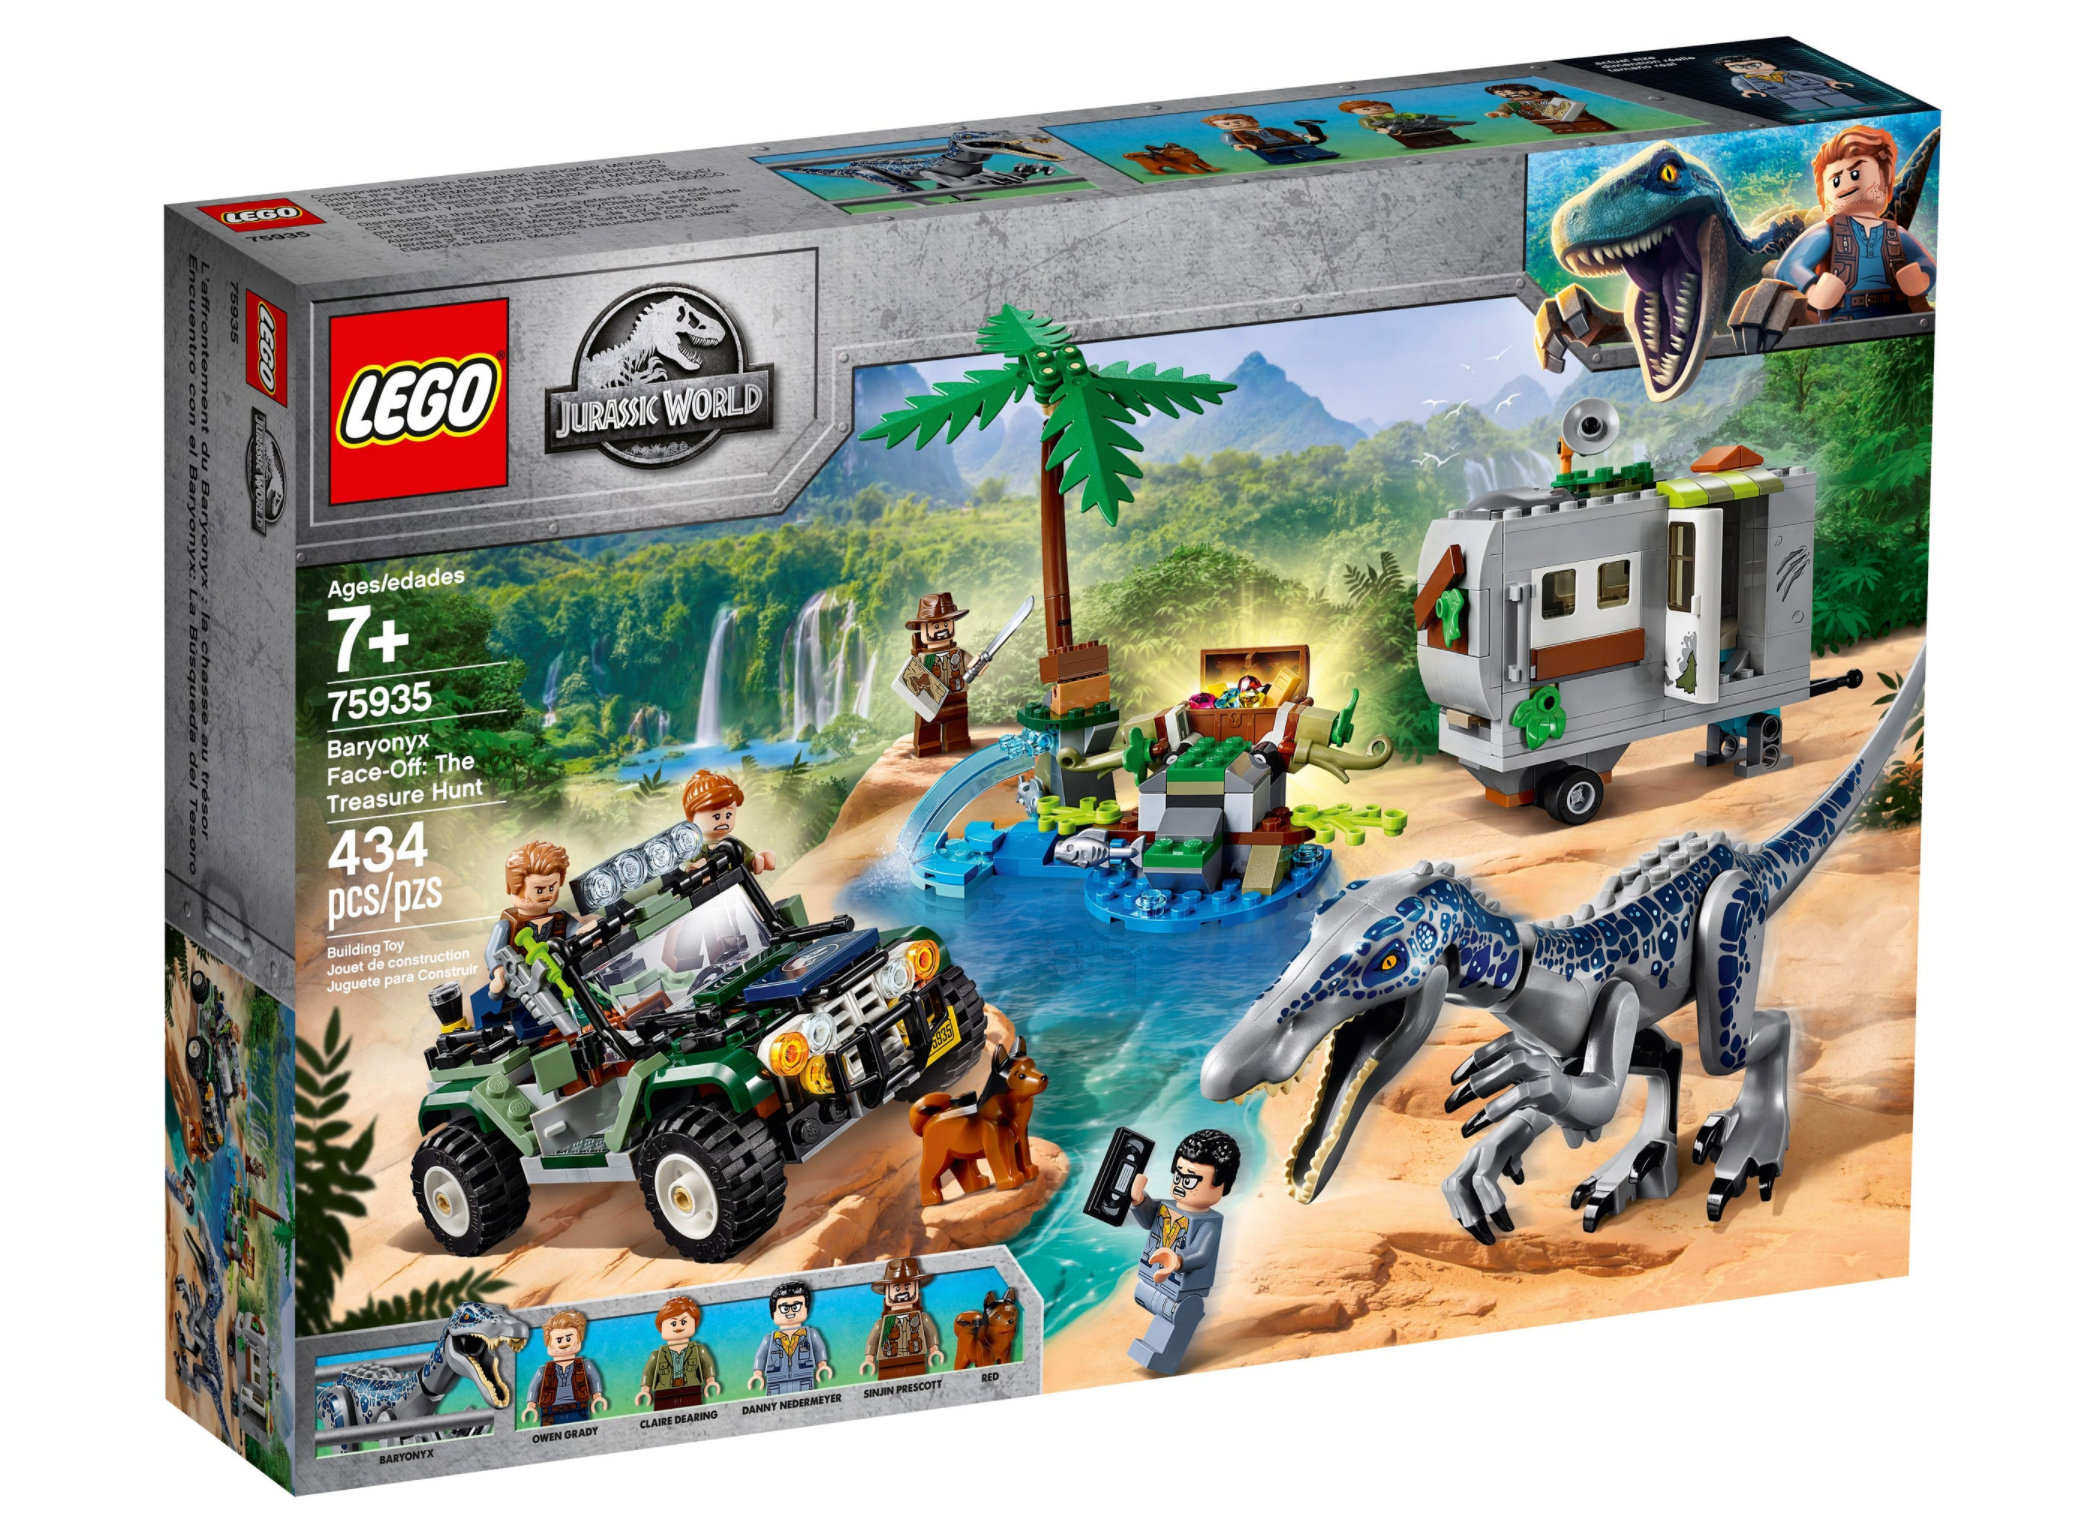 LEGO: Jurassic World - Baryonyx Face-Off: The Treasure Hunt